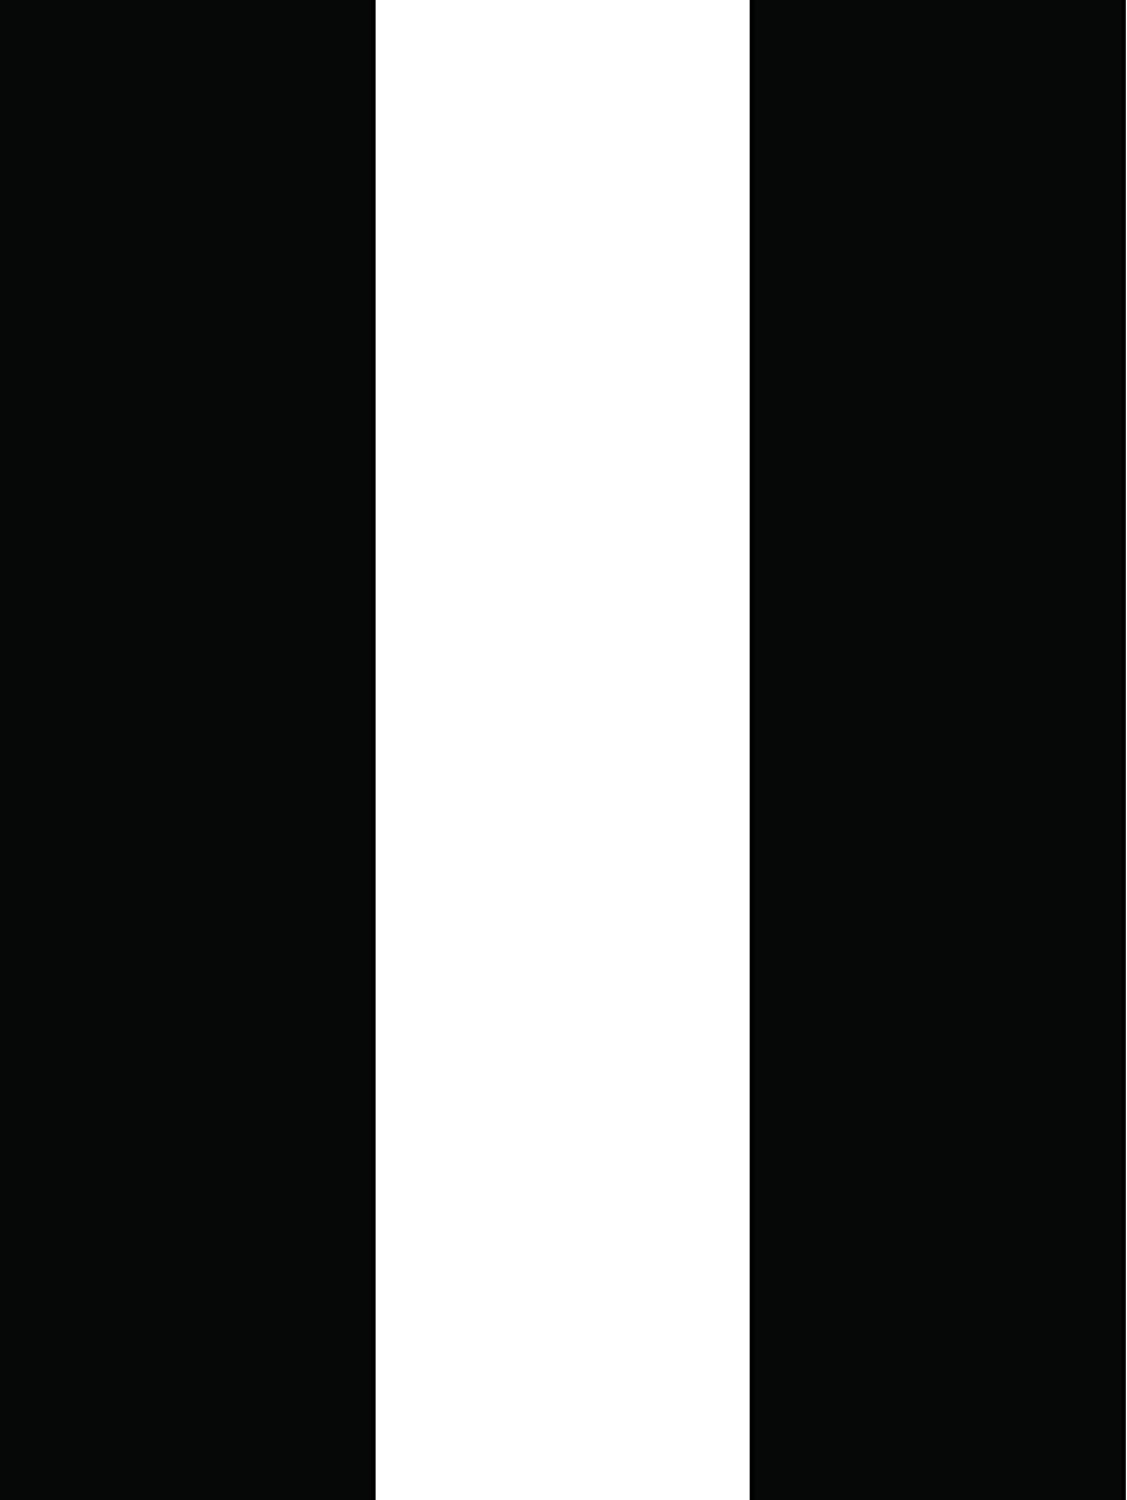 REPEEL Black and White Stripe. Designer Removable Peel and Stick Wallpaper